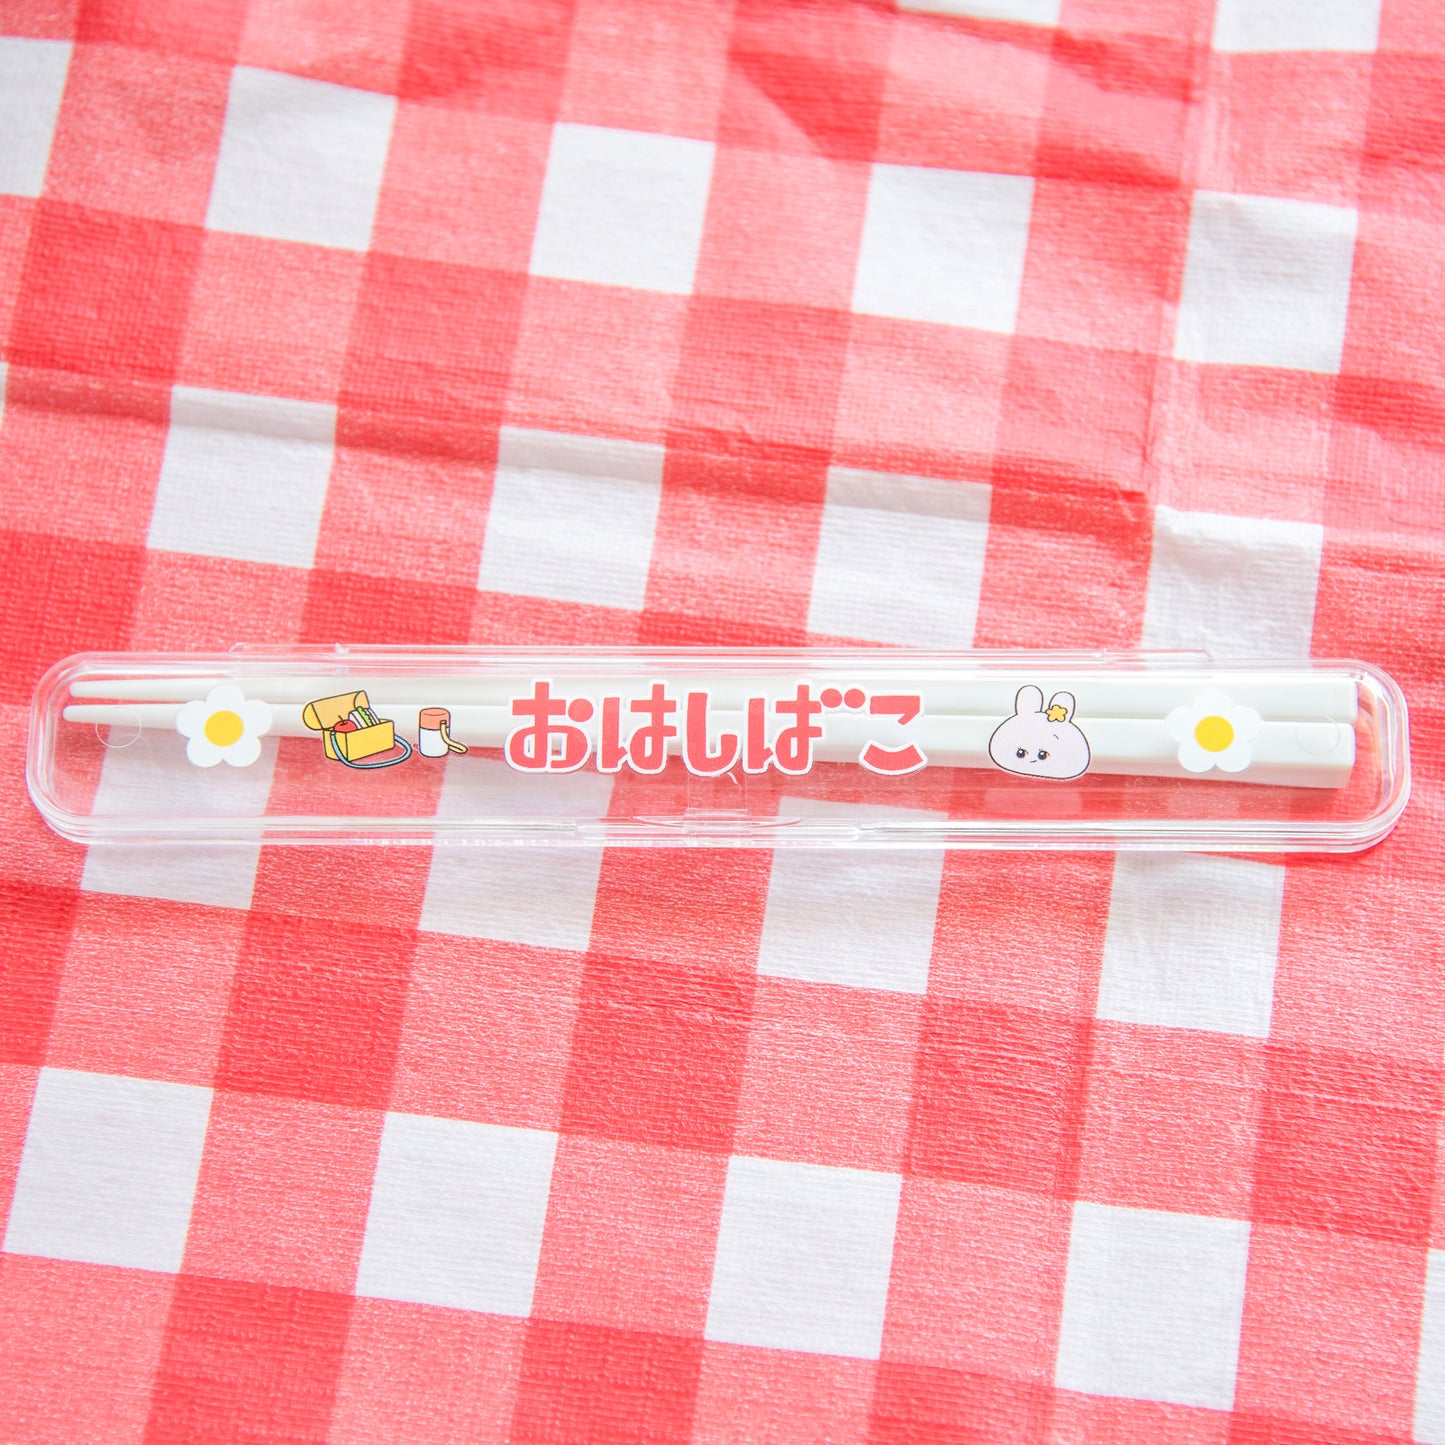 [Asamimi-chan] Chopsticks set [Made to order]